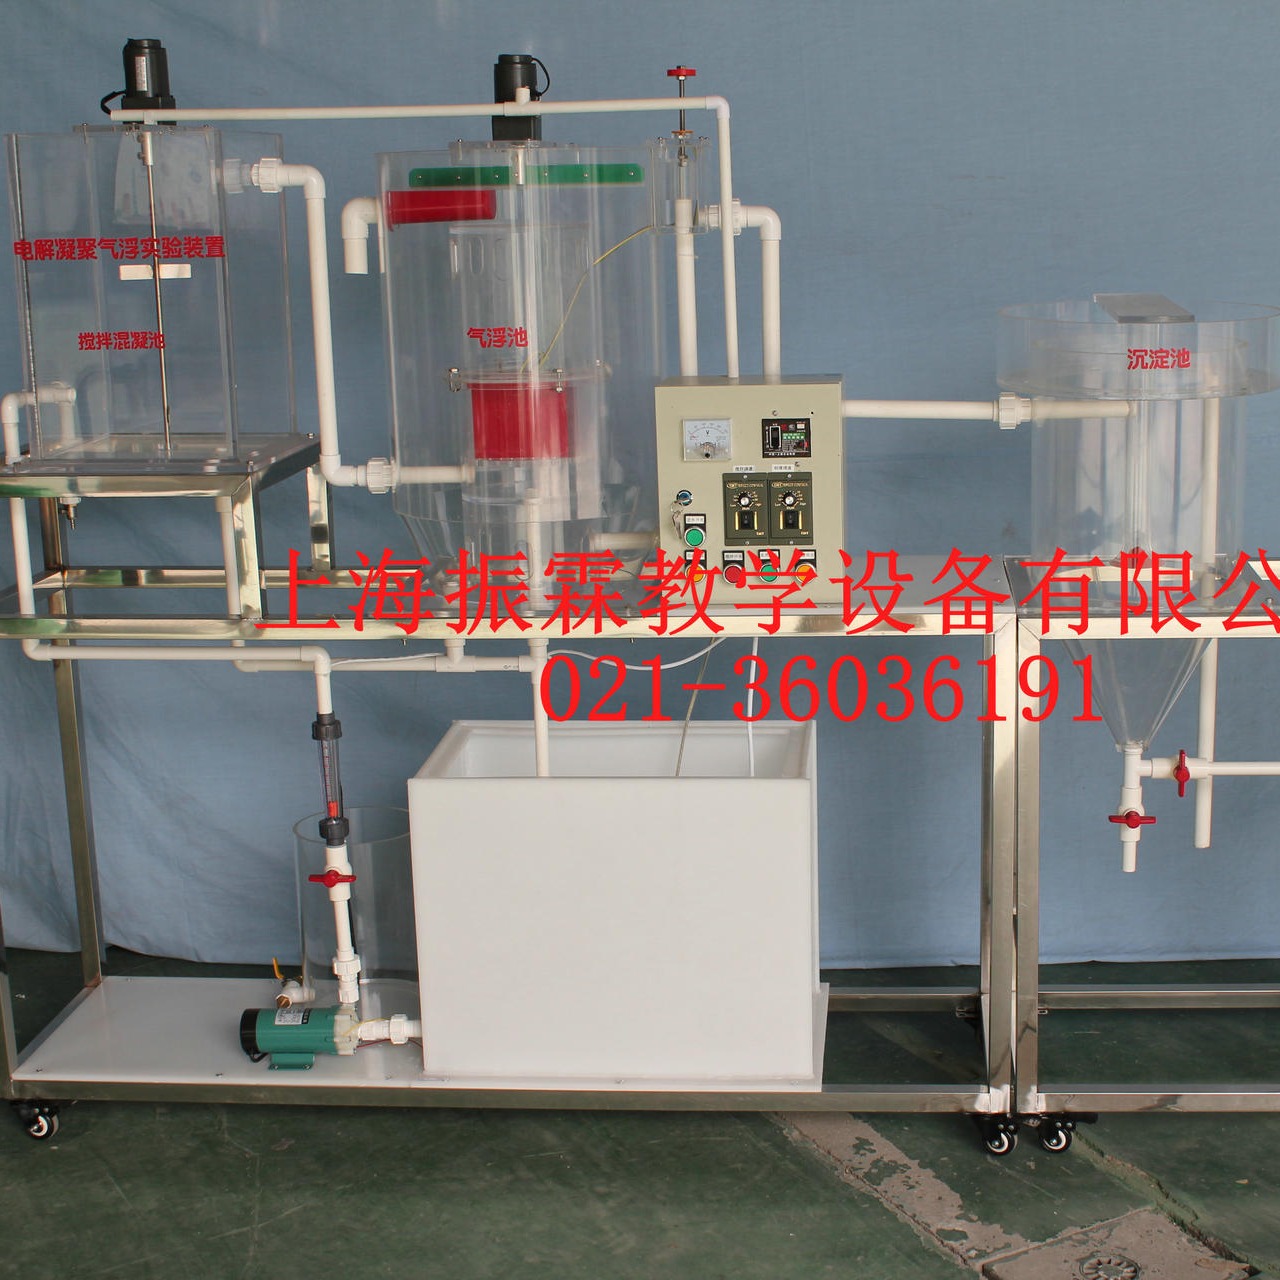 ZLHJ-V90型电解凝聚气浮法实验装置  电解凝聚气浮法实训设备 电解凝聚气浮法实训台 振霖厂家制造